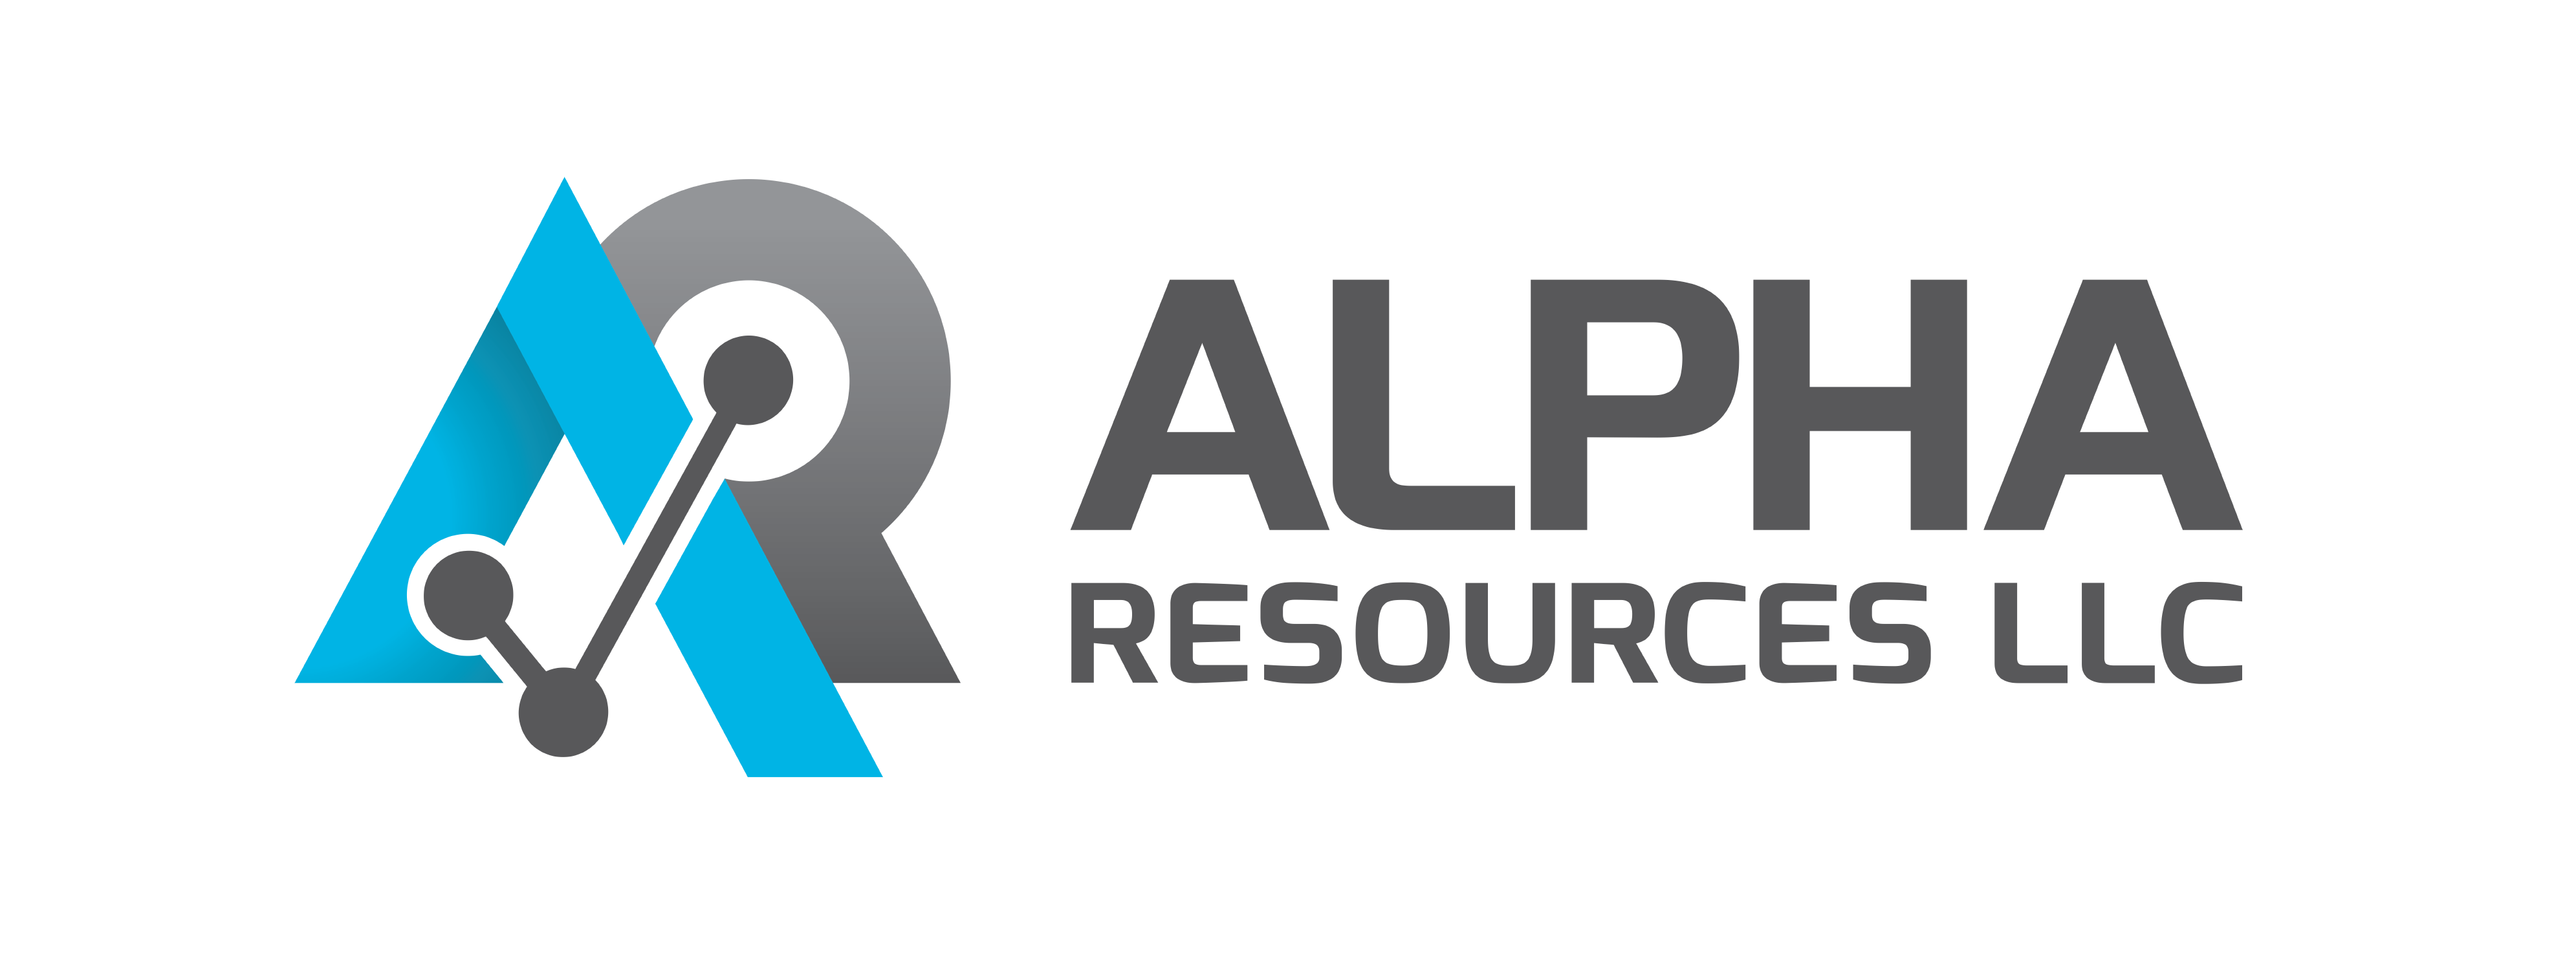 Alpha Resources Logo